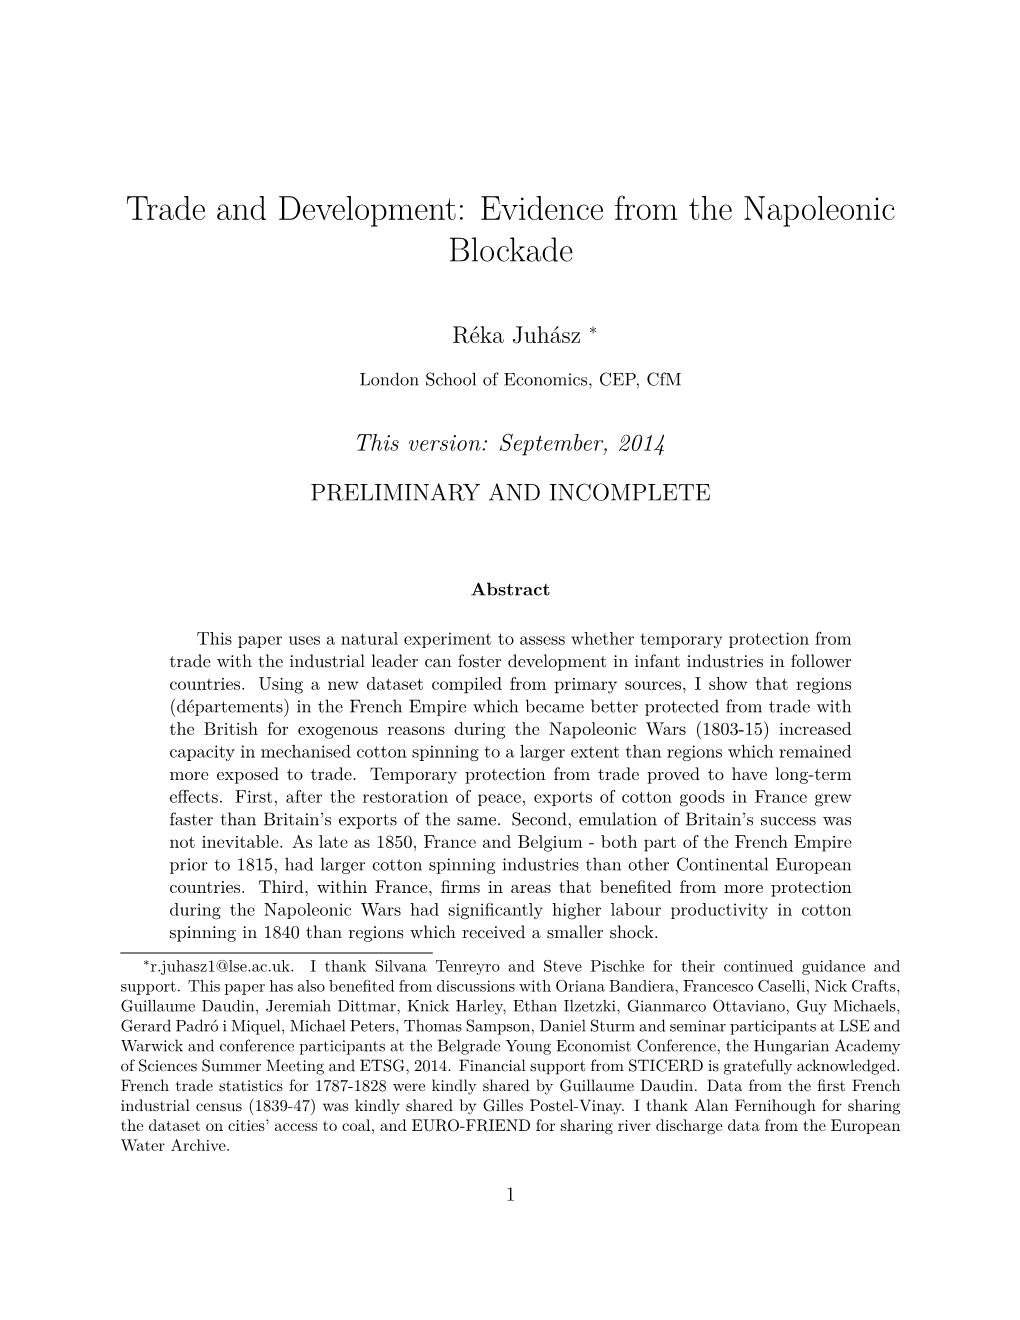 Trade and Development: Evidence from the Napoleonic Blockade